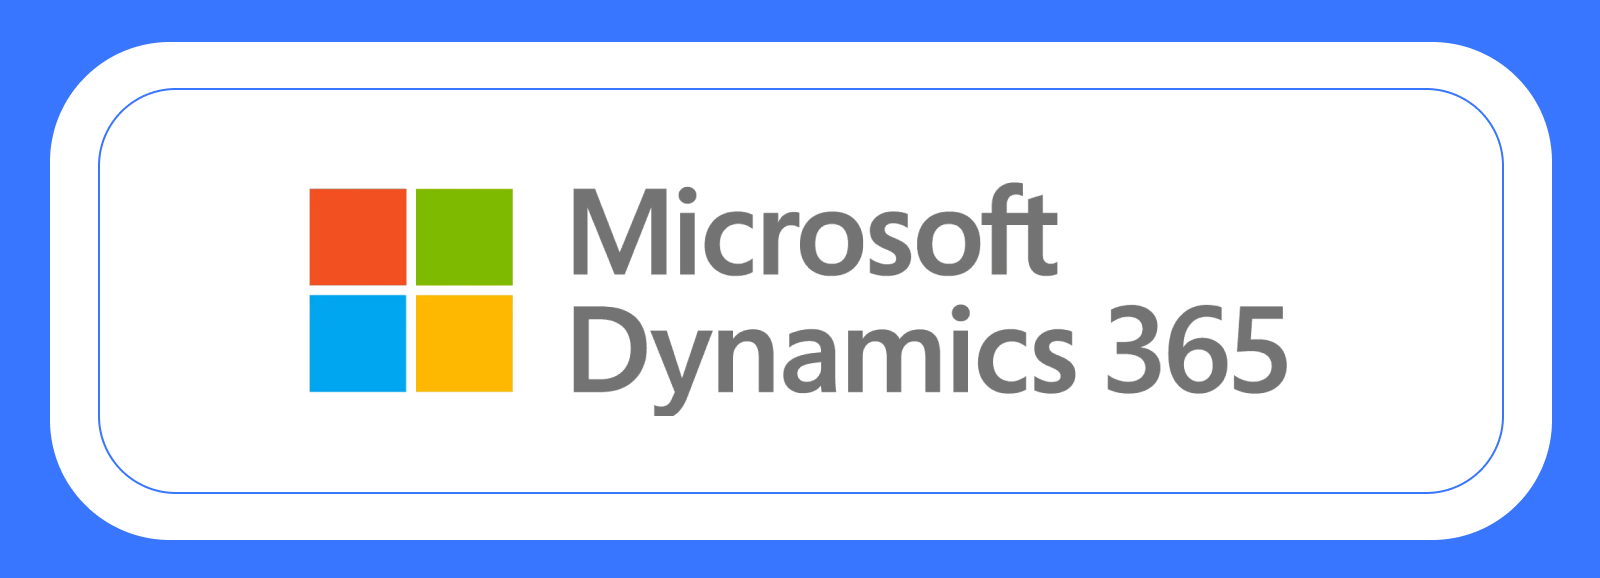 Microsoft Dynamics 365 AI